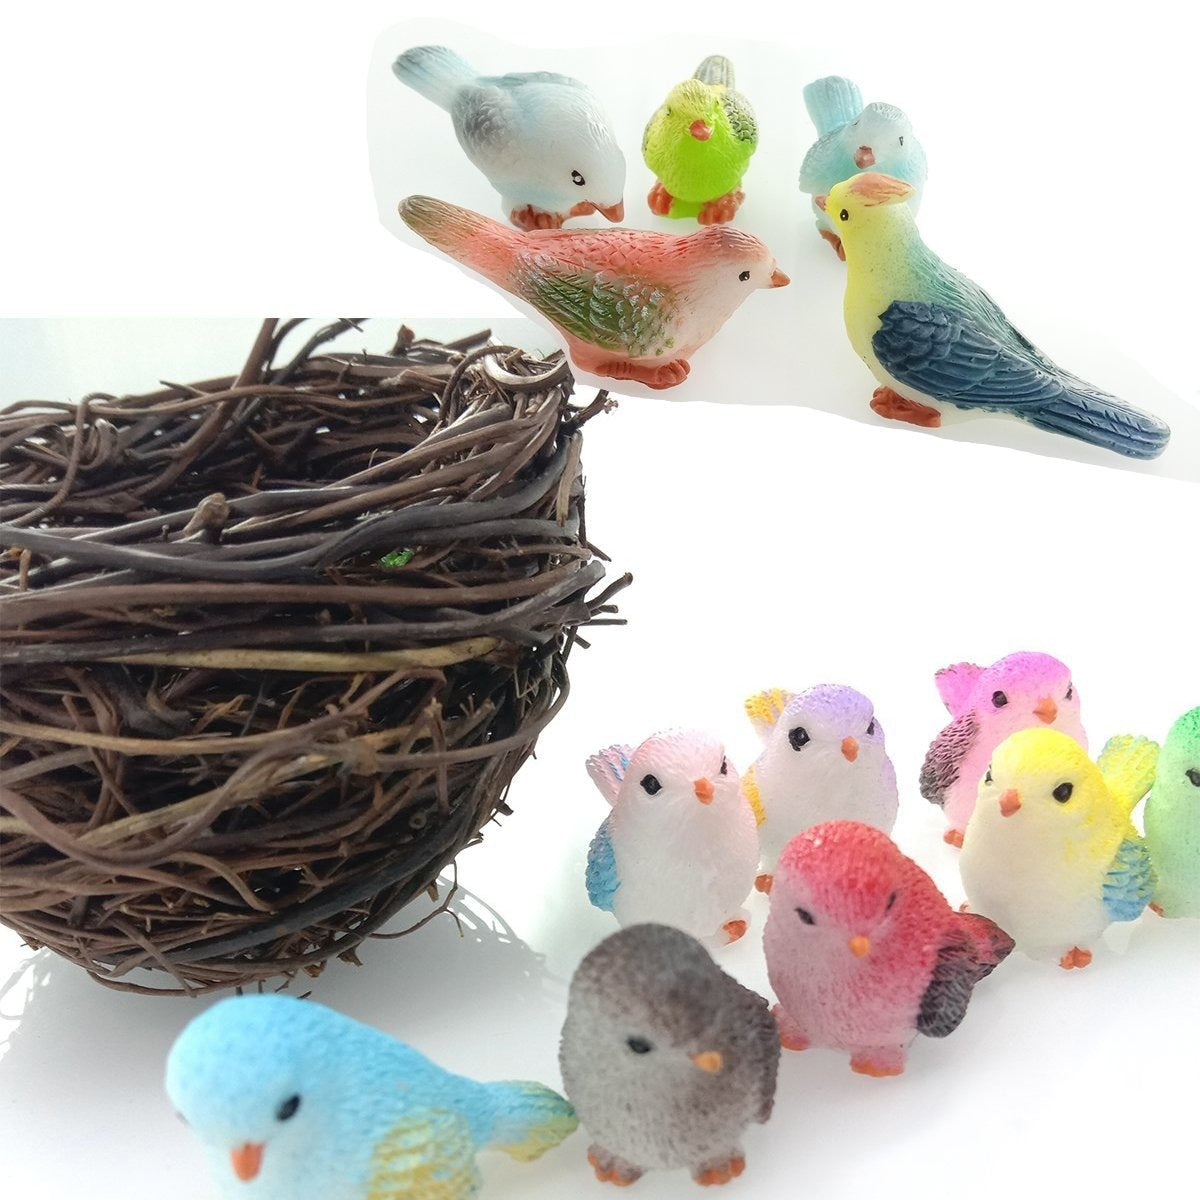 8 Birds in a Nest Resin Parrot Bird Nest Figurine Animal Model Home Decorations Miniature Fairy Garden Bonsai Modern Decor